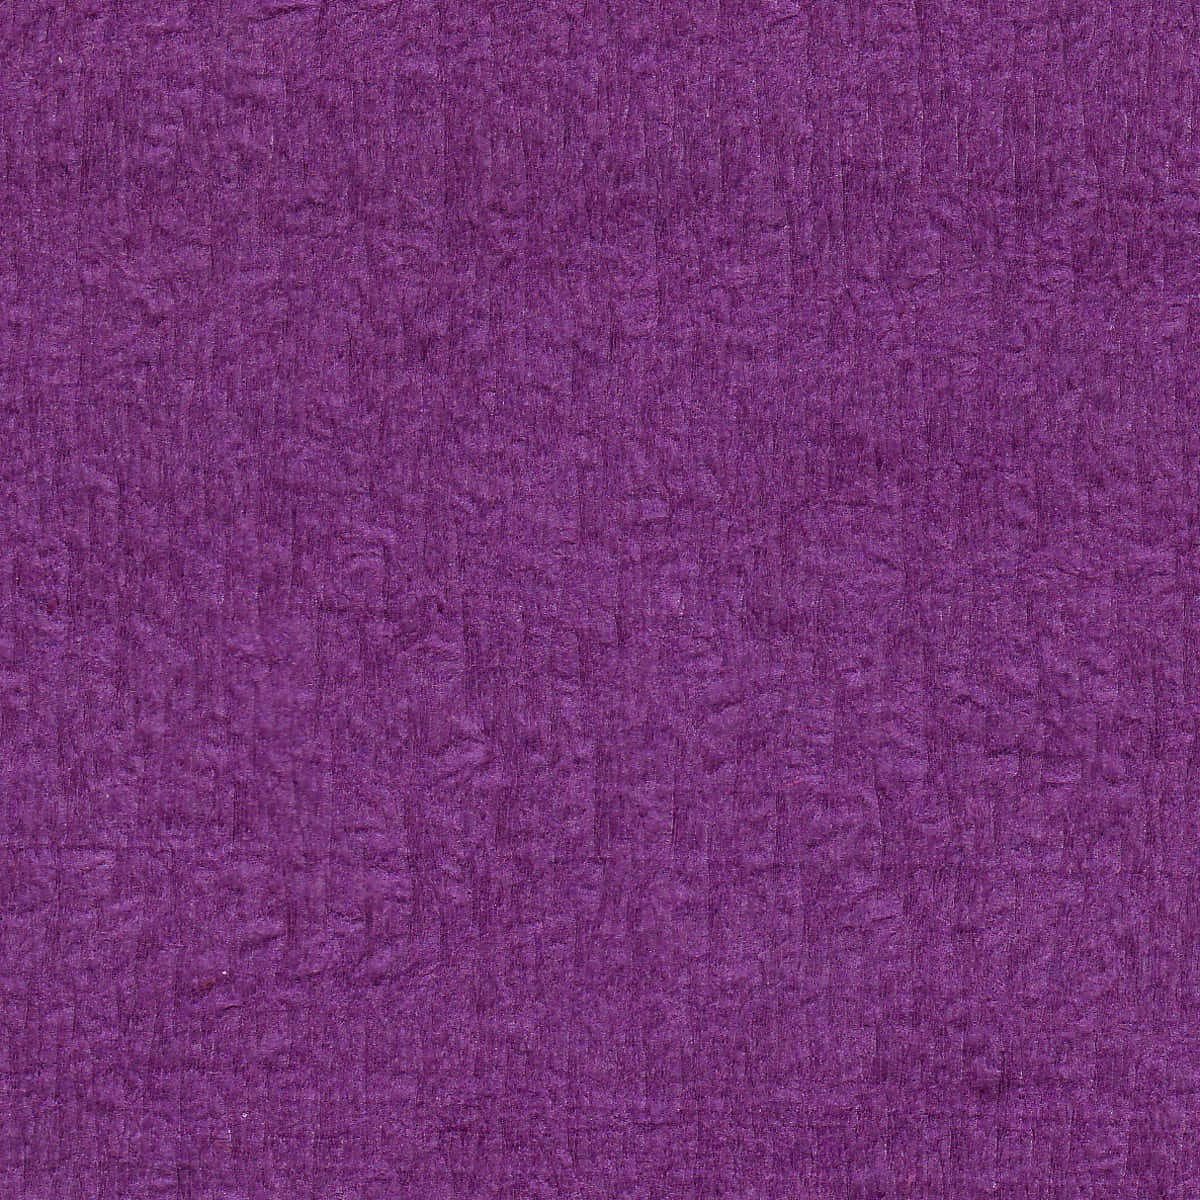 Caption: Elegant And Intricate Purple Paper Design Wallpaper